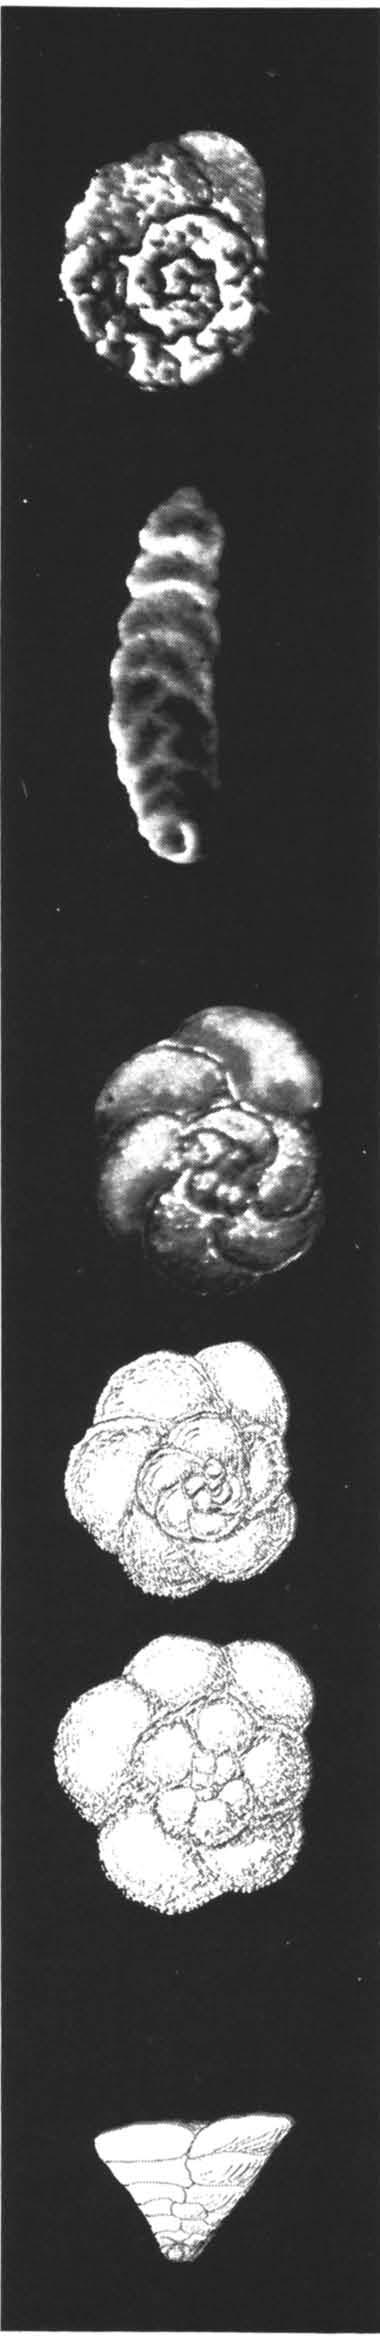 Marssonella trochus 92. 86. Rotalipora turonica 87. Arenobulimina preslii 88. Dorothia gradata 89.